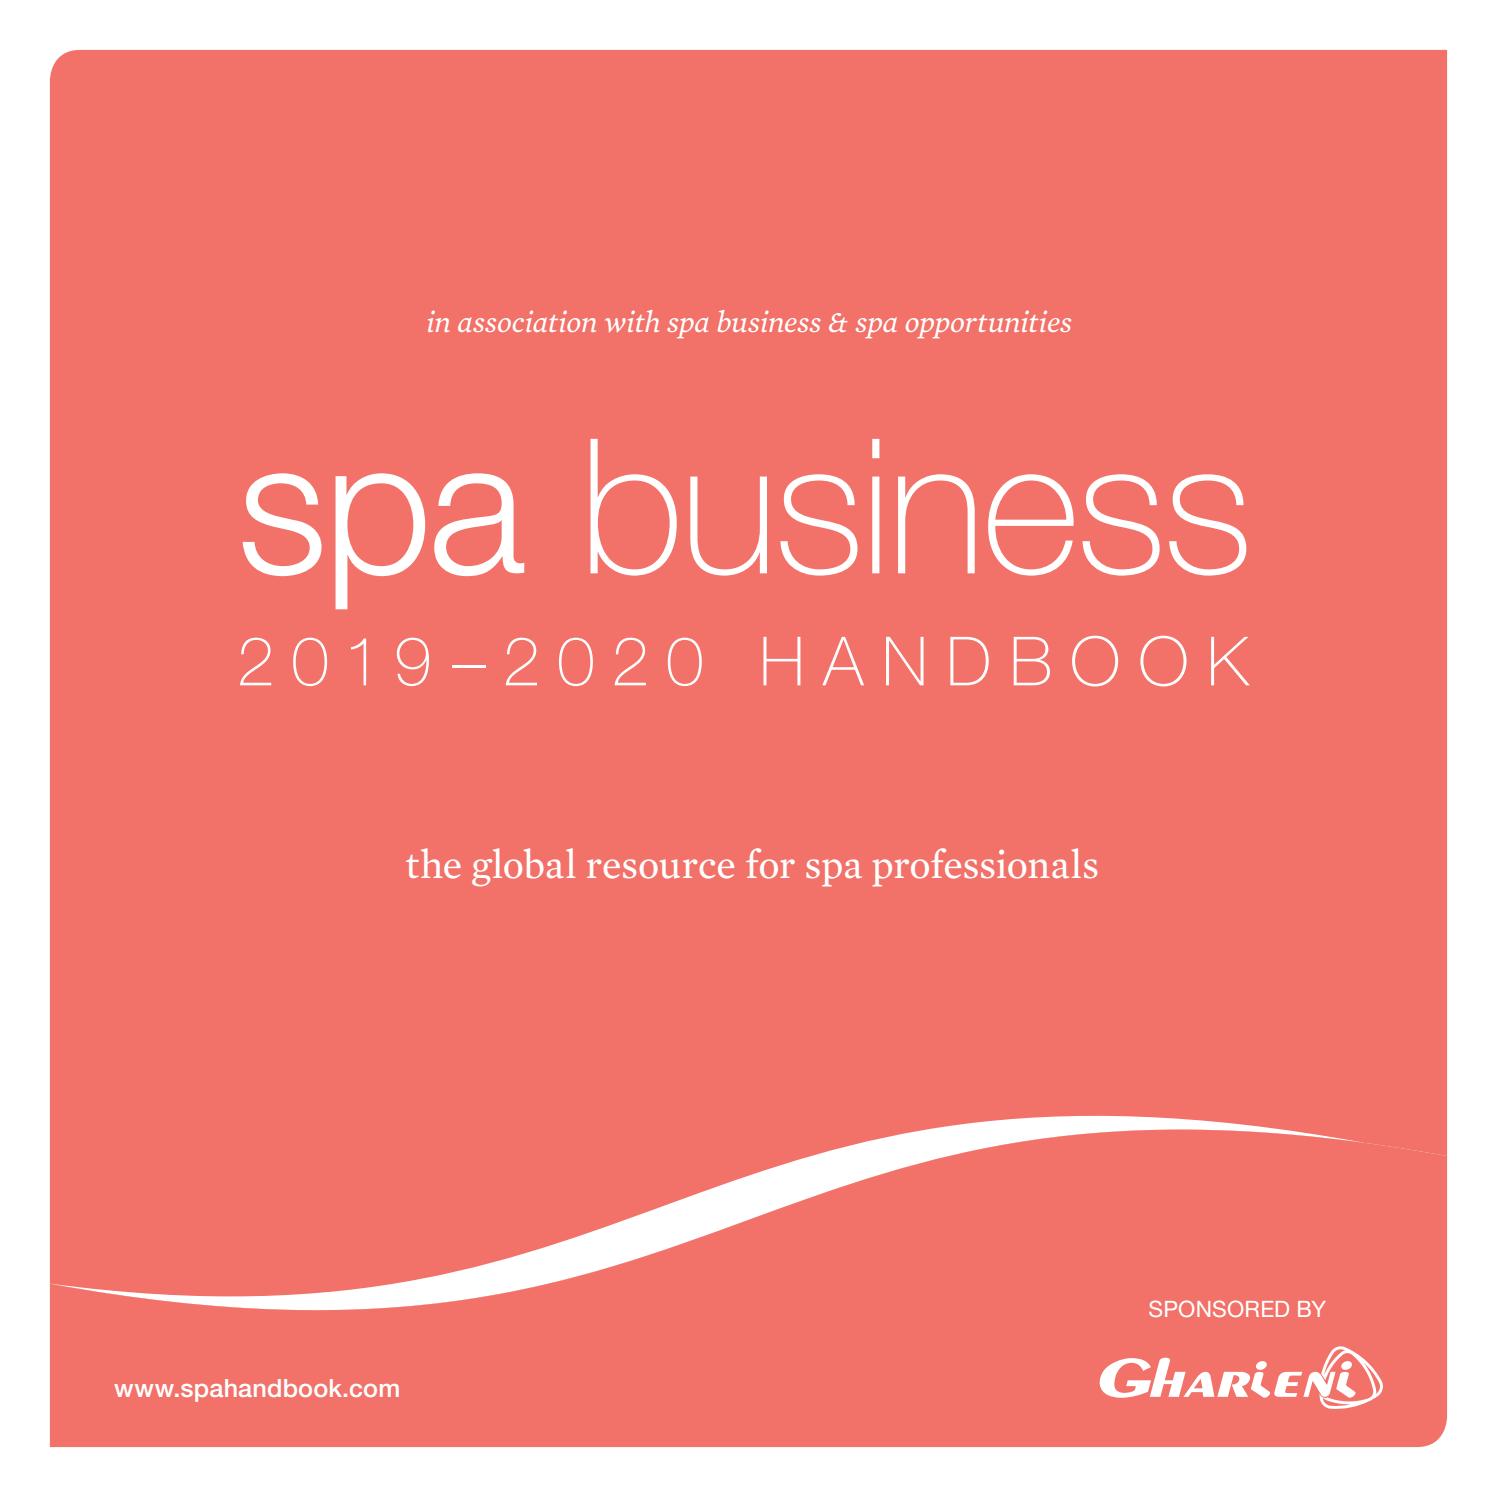 Plan Salon De Jardin En Palette Génial Spa Business Handbook 2019 2020 by Leisure Media issuu